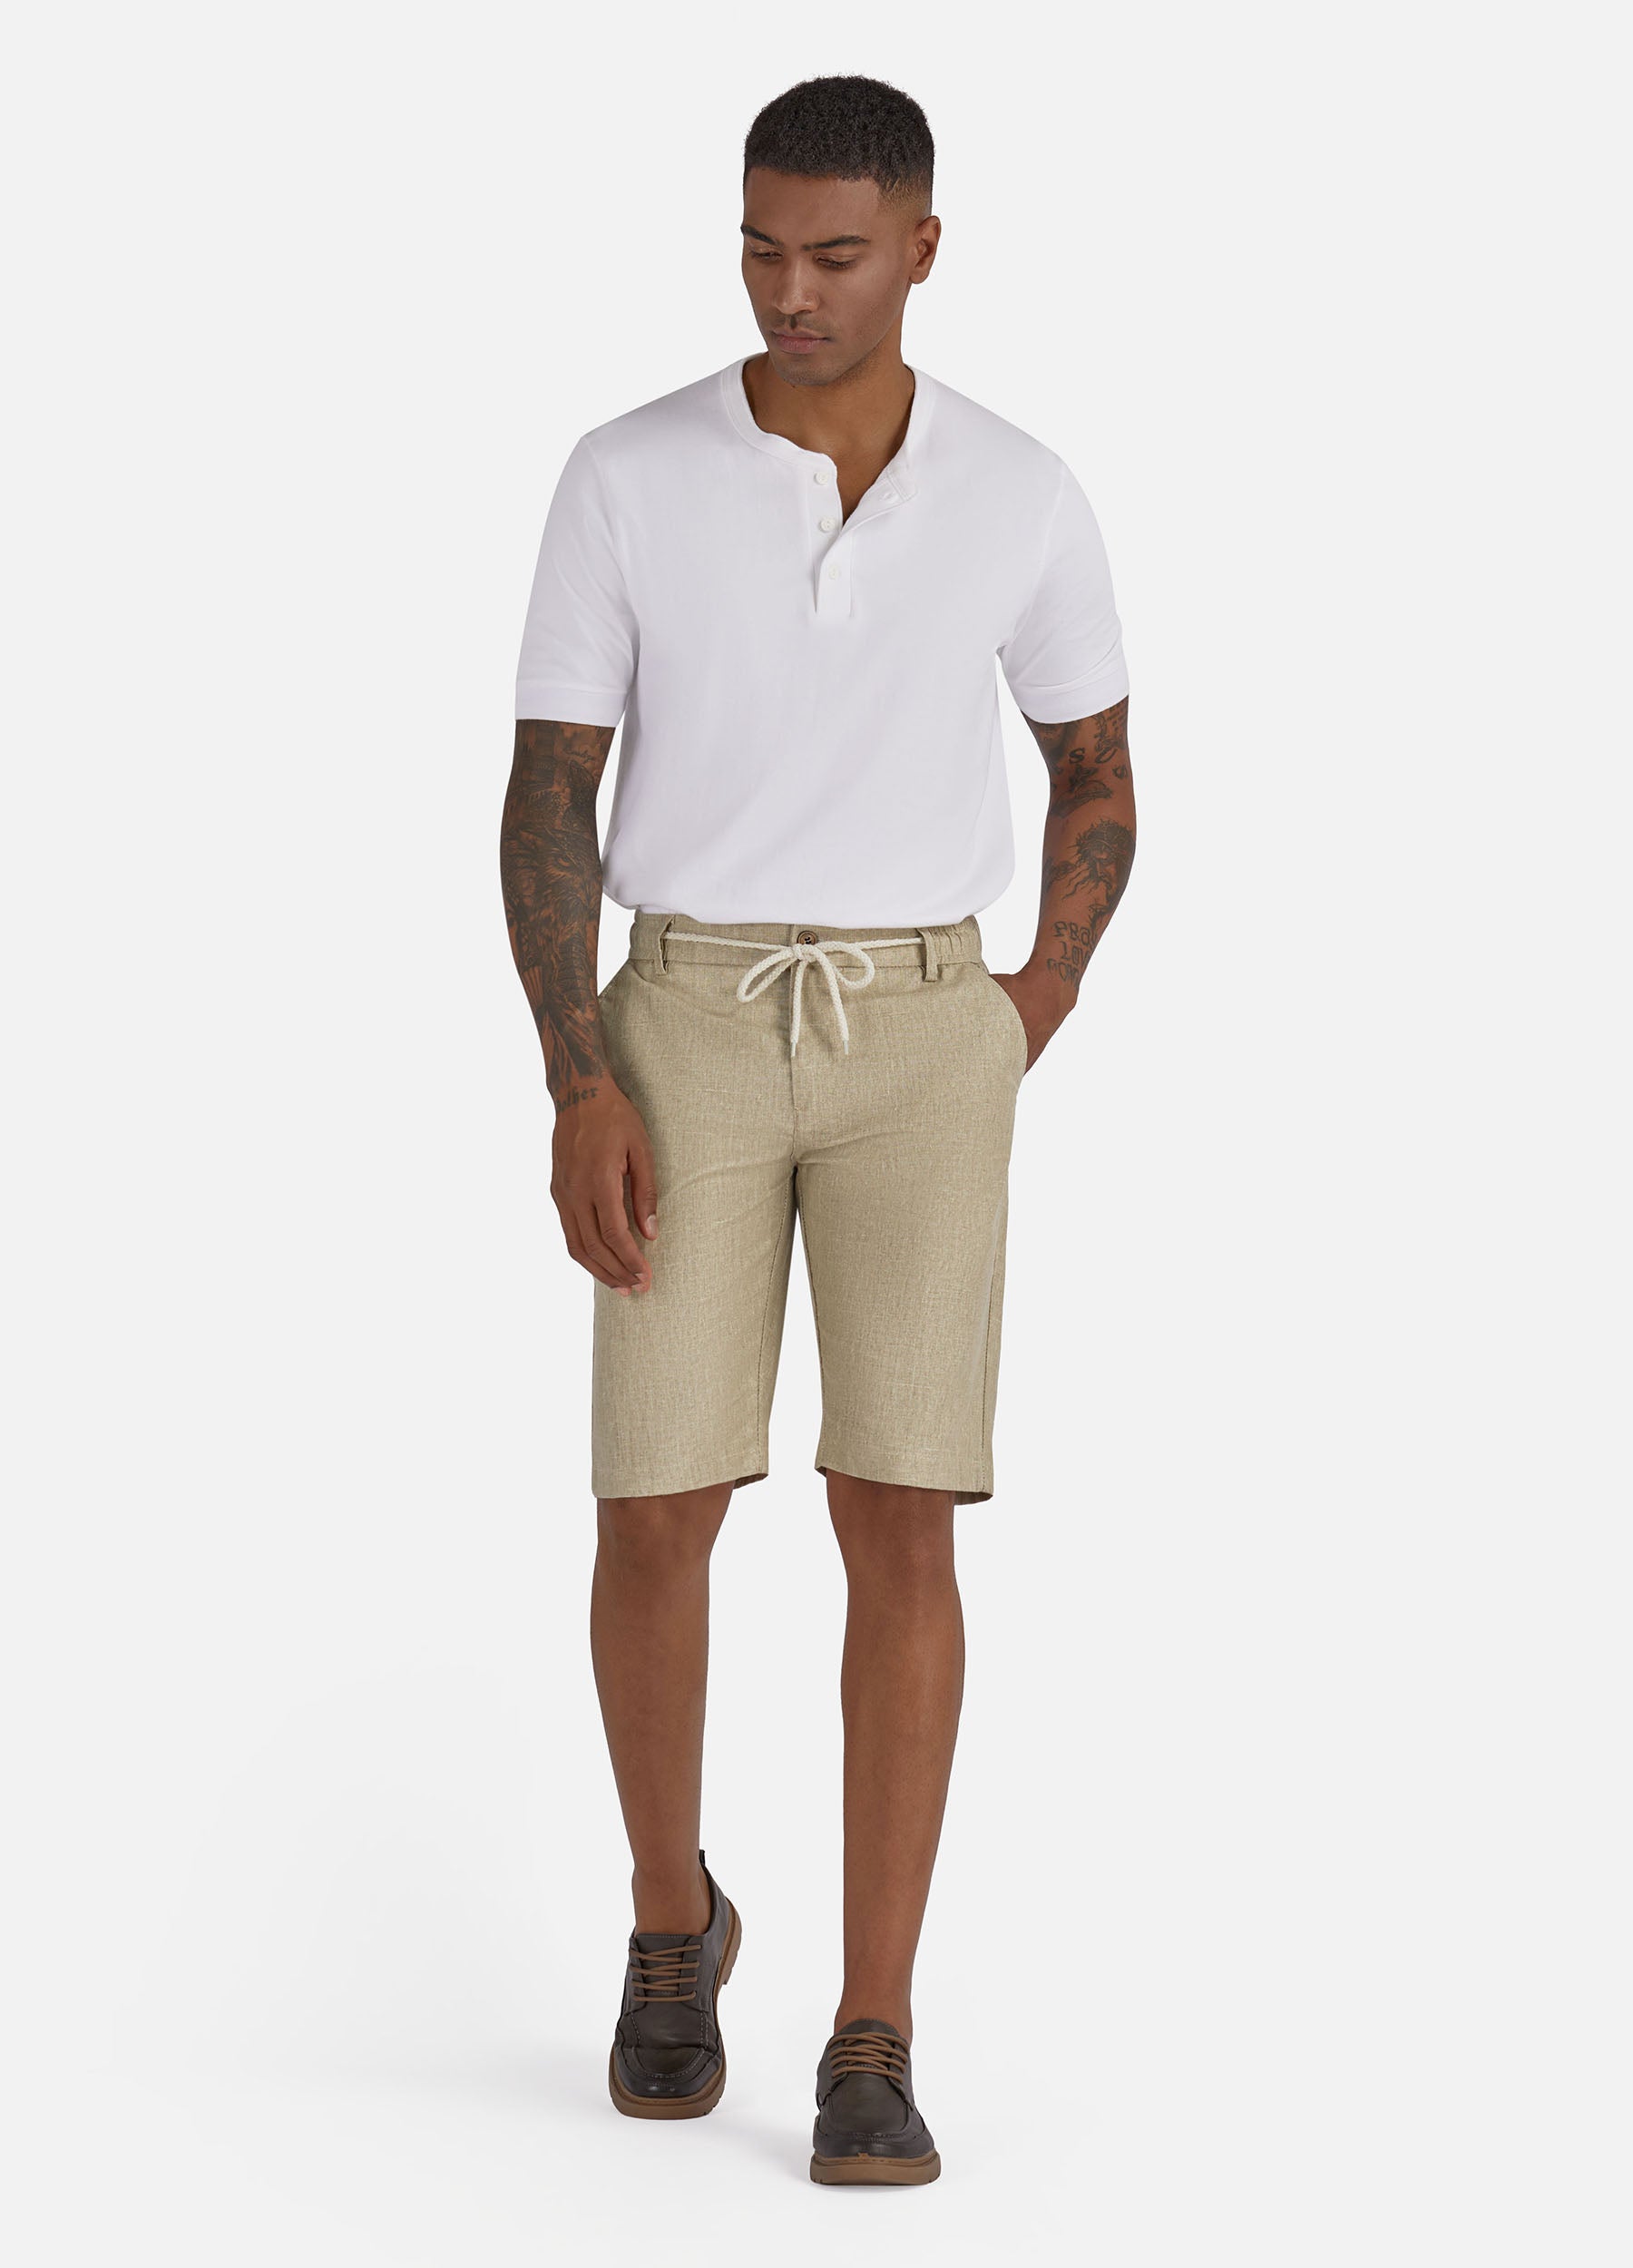 1PA1 Men's Cotton Linen Flat Front Shorts Drawstring Elastic Waist Beach Shorts(Clearance)